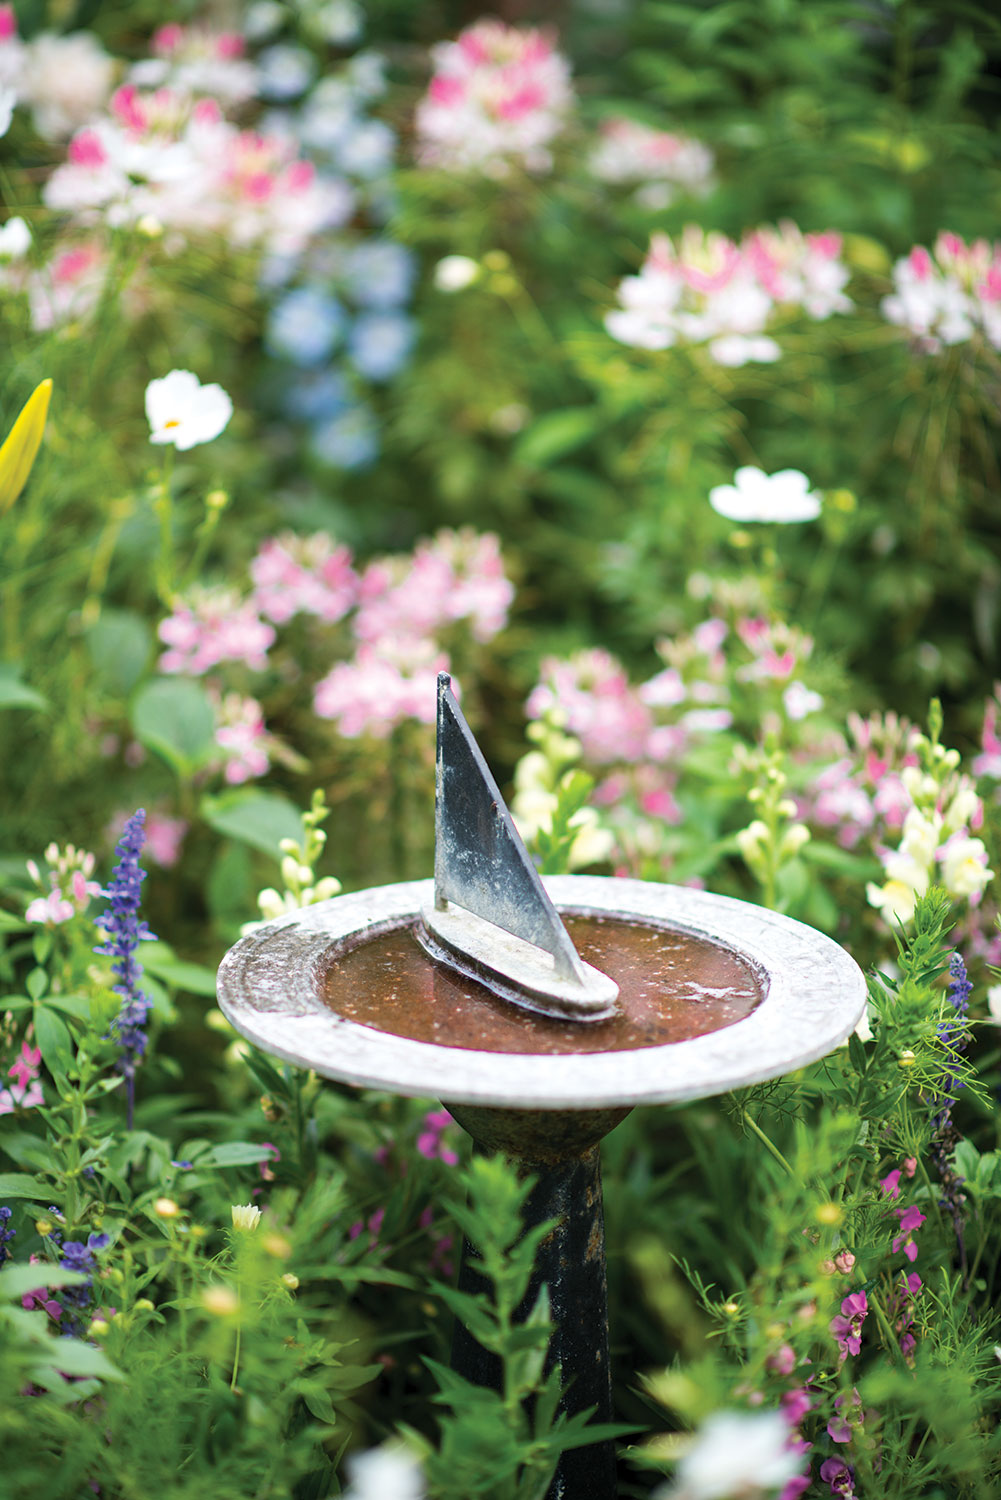 A sundial birdbath in the courtyard garden.